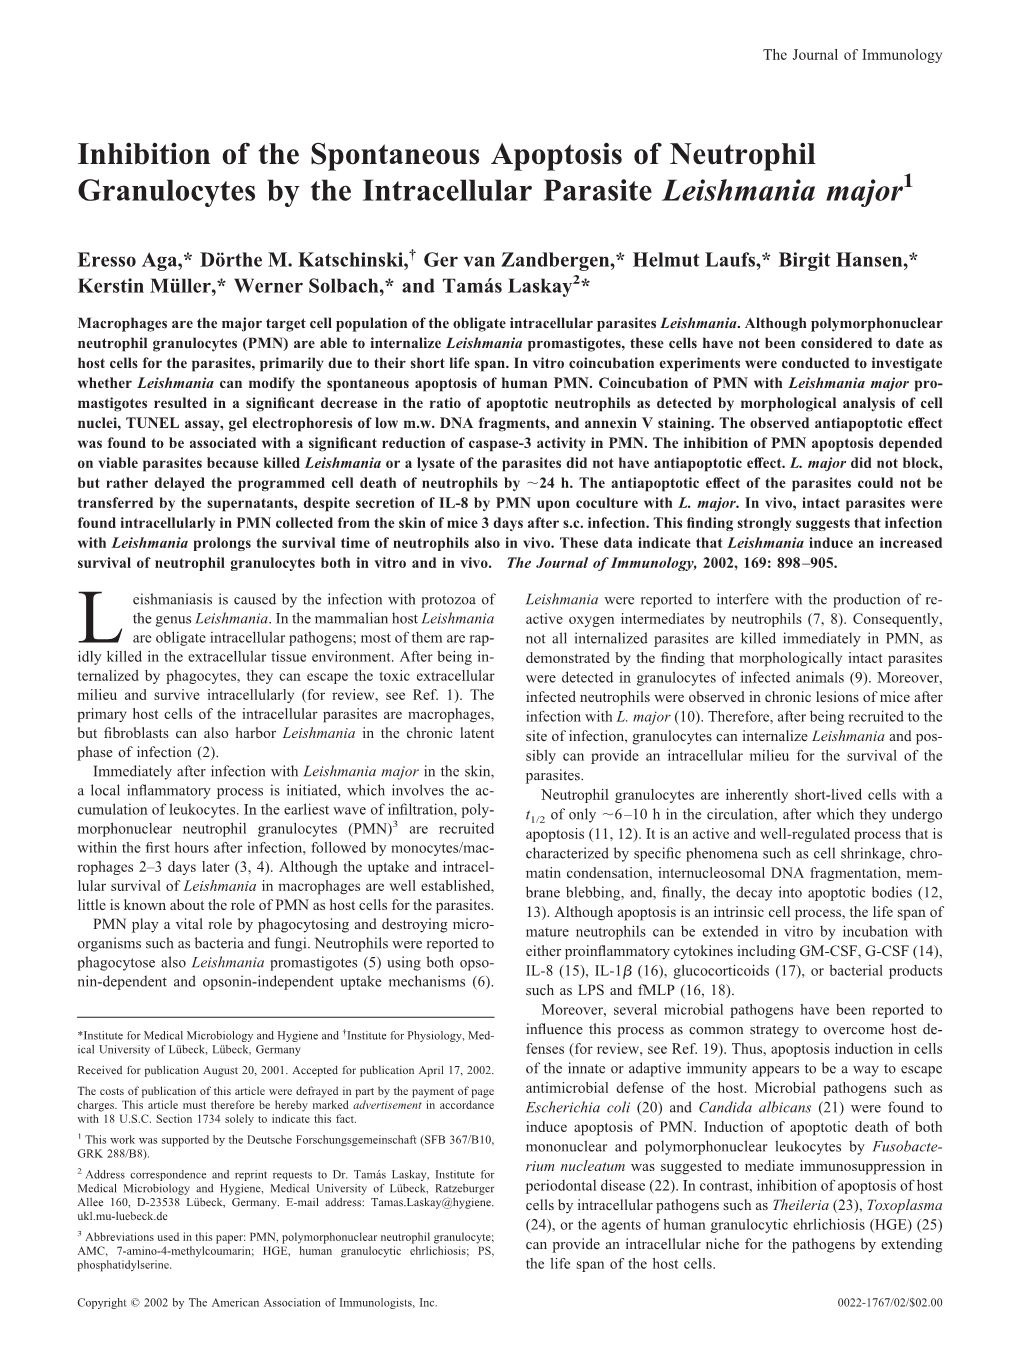 Leishmania Major Parasite Neutrophil Granulocytes by the Intracellular Inhibition of the Spontaneous Apoptosis Of